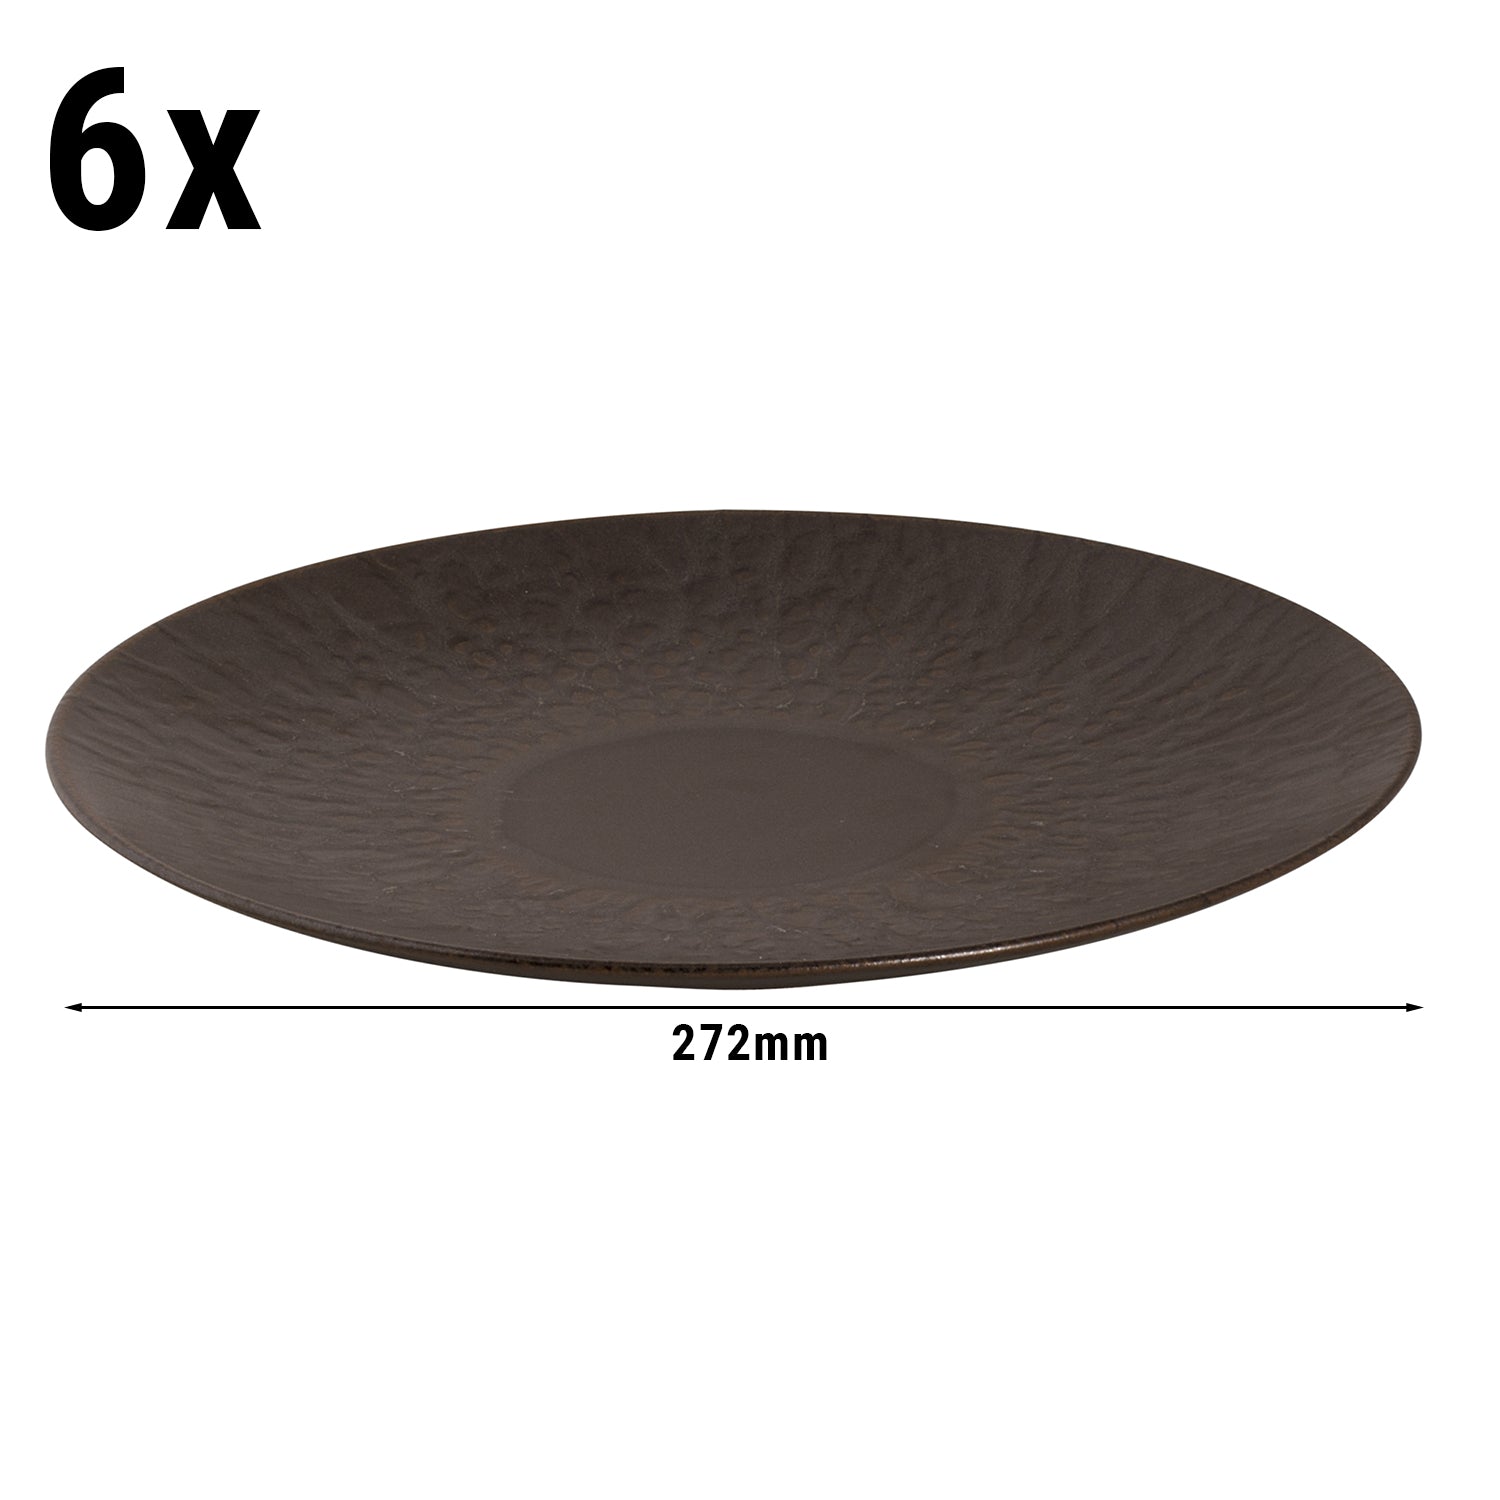 (6 stk) Rust - Plate flat - Ø 27 cm - Brun